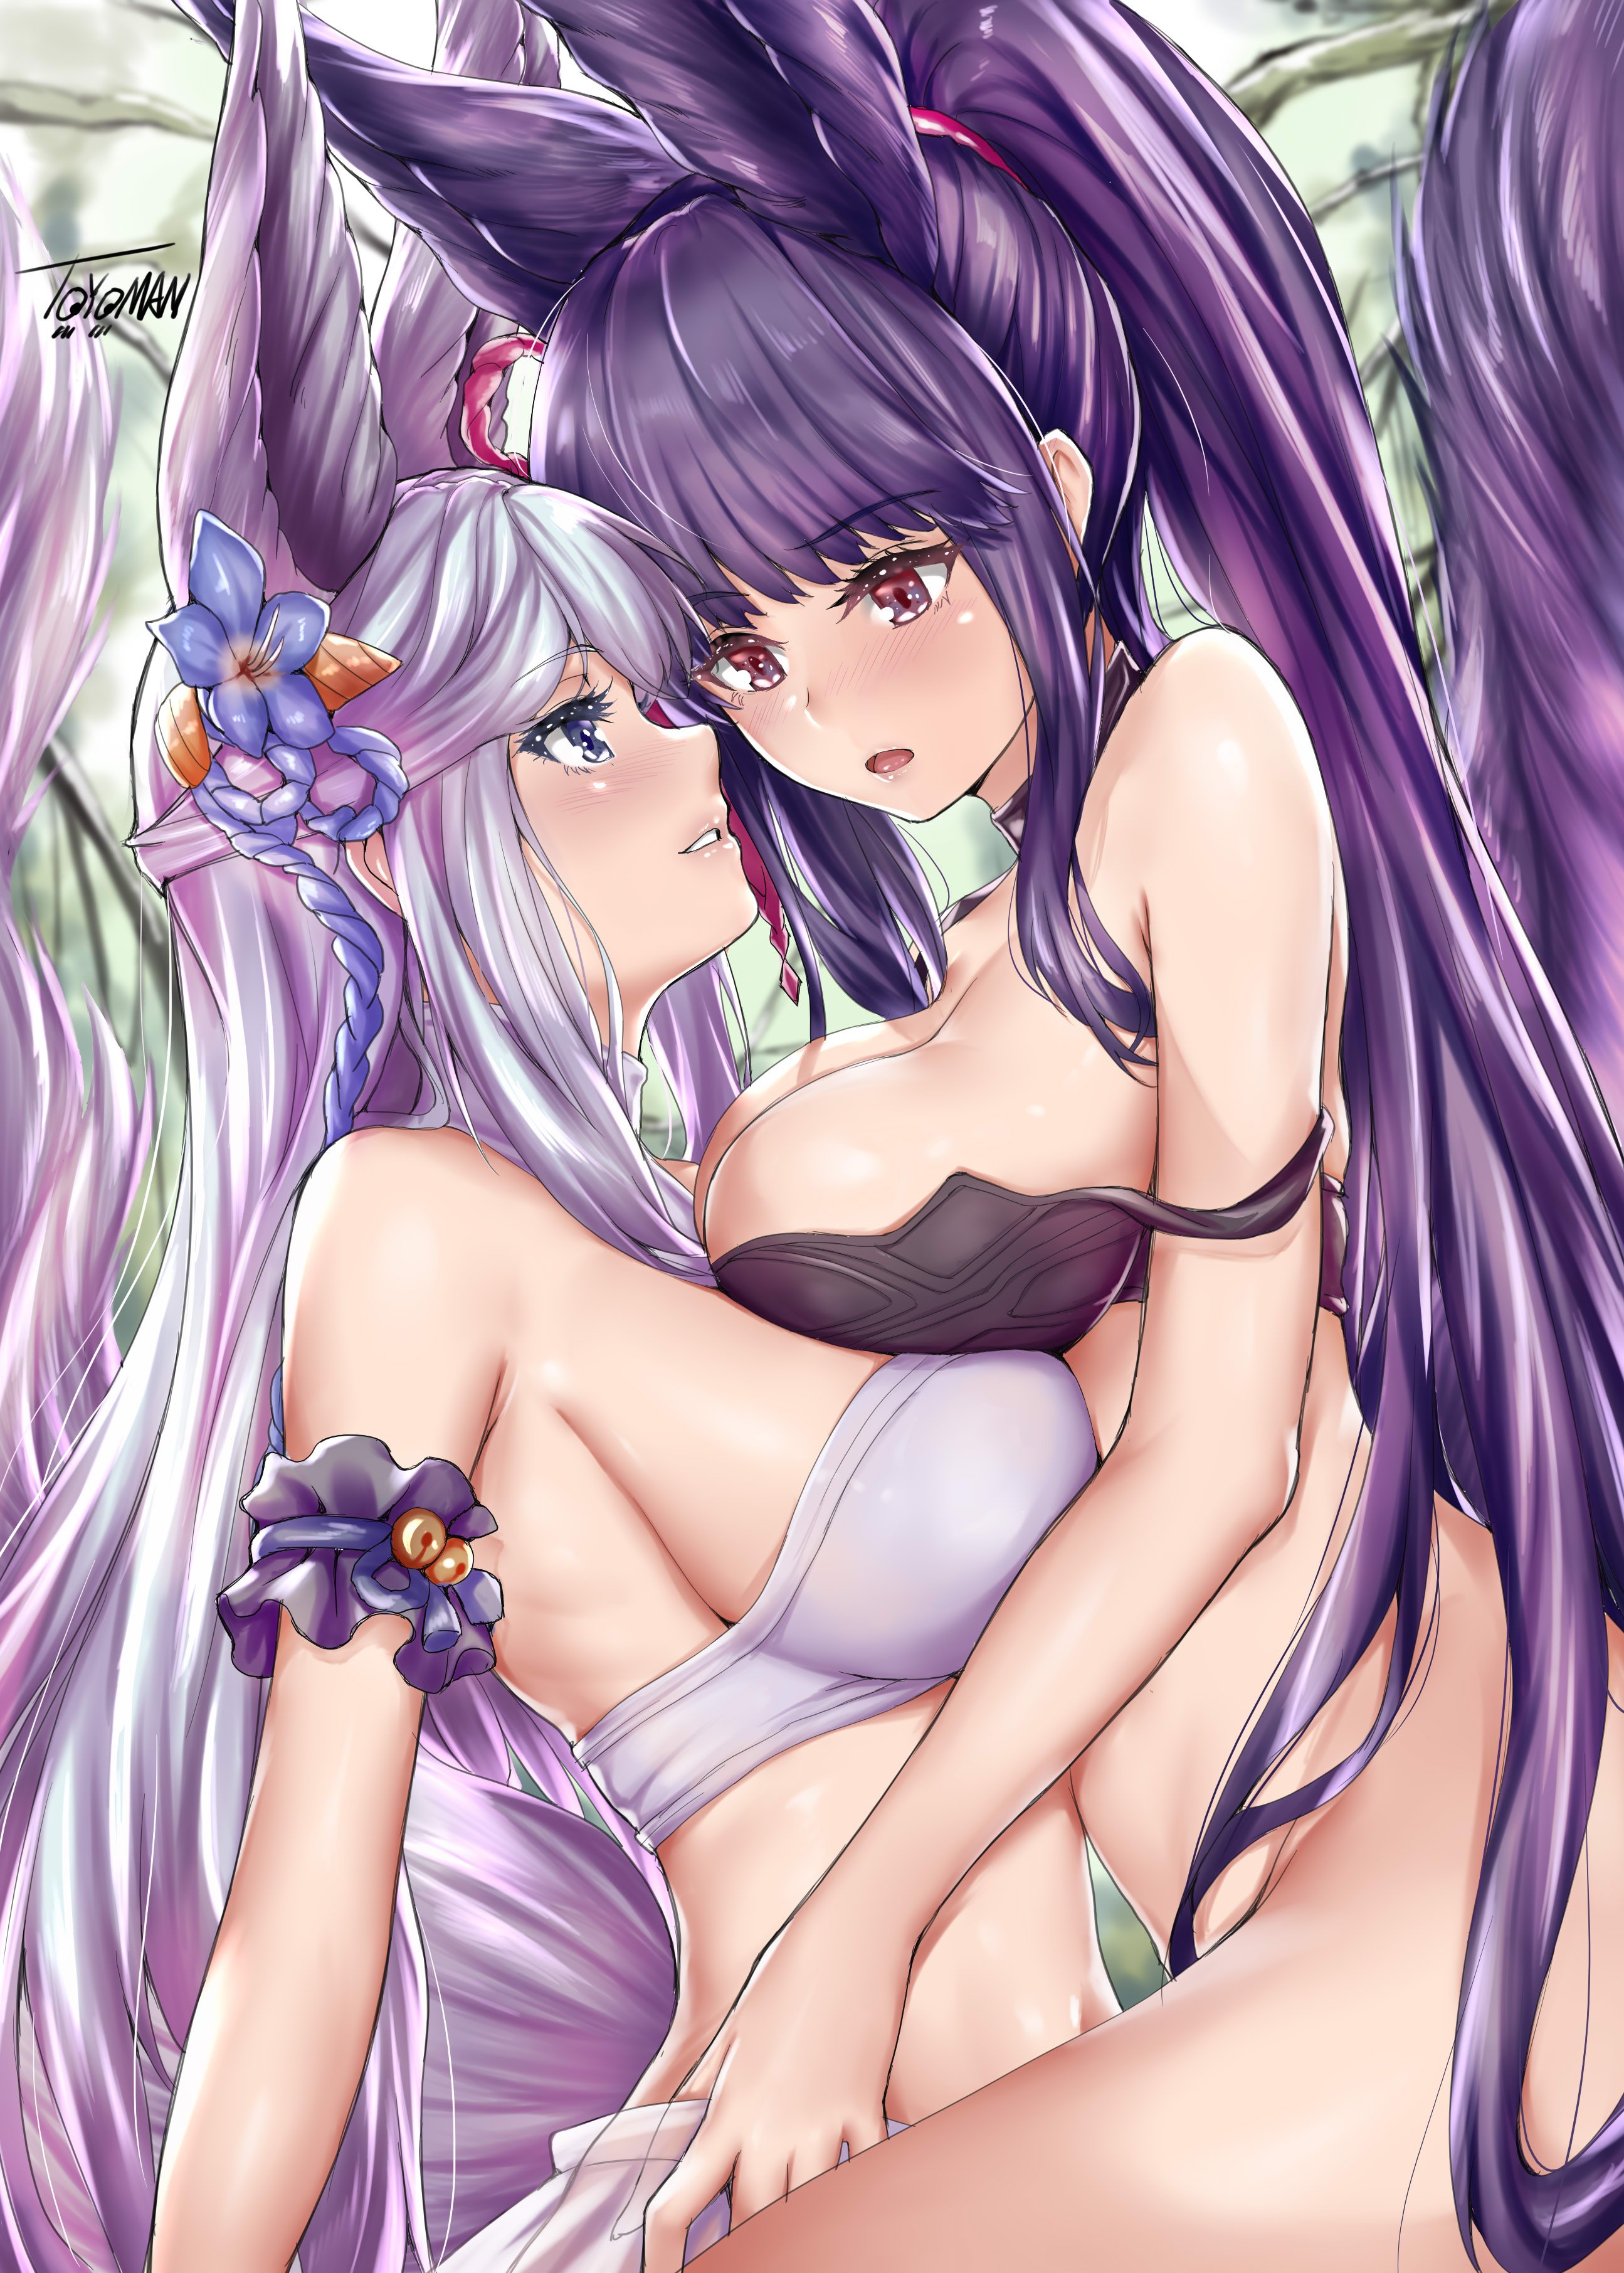 Yuri anime boobs